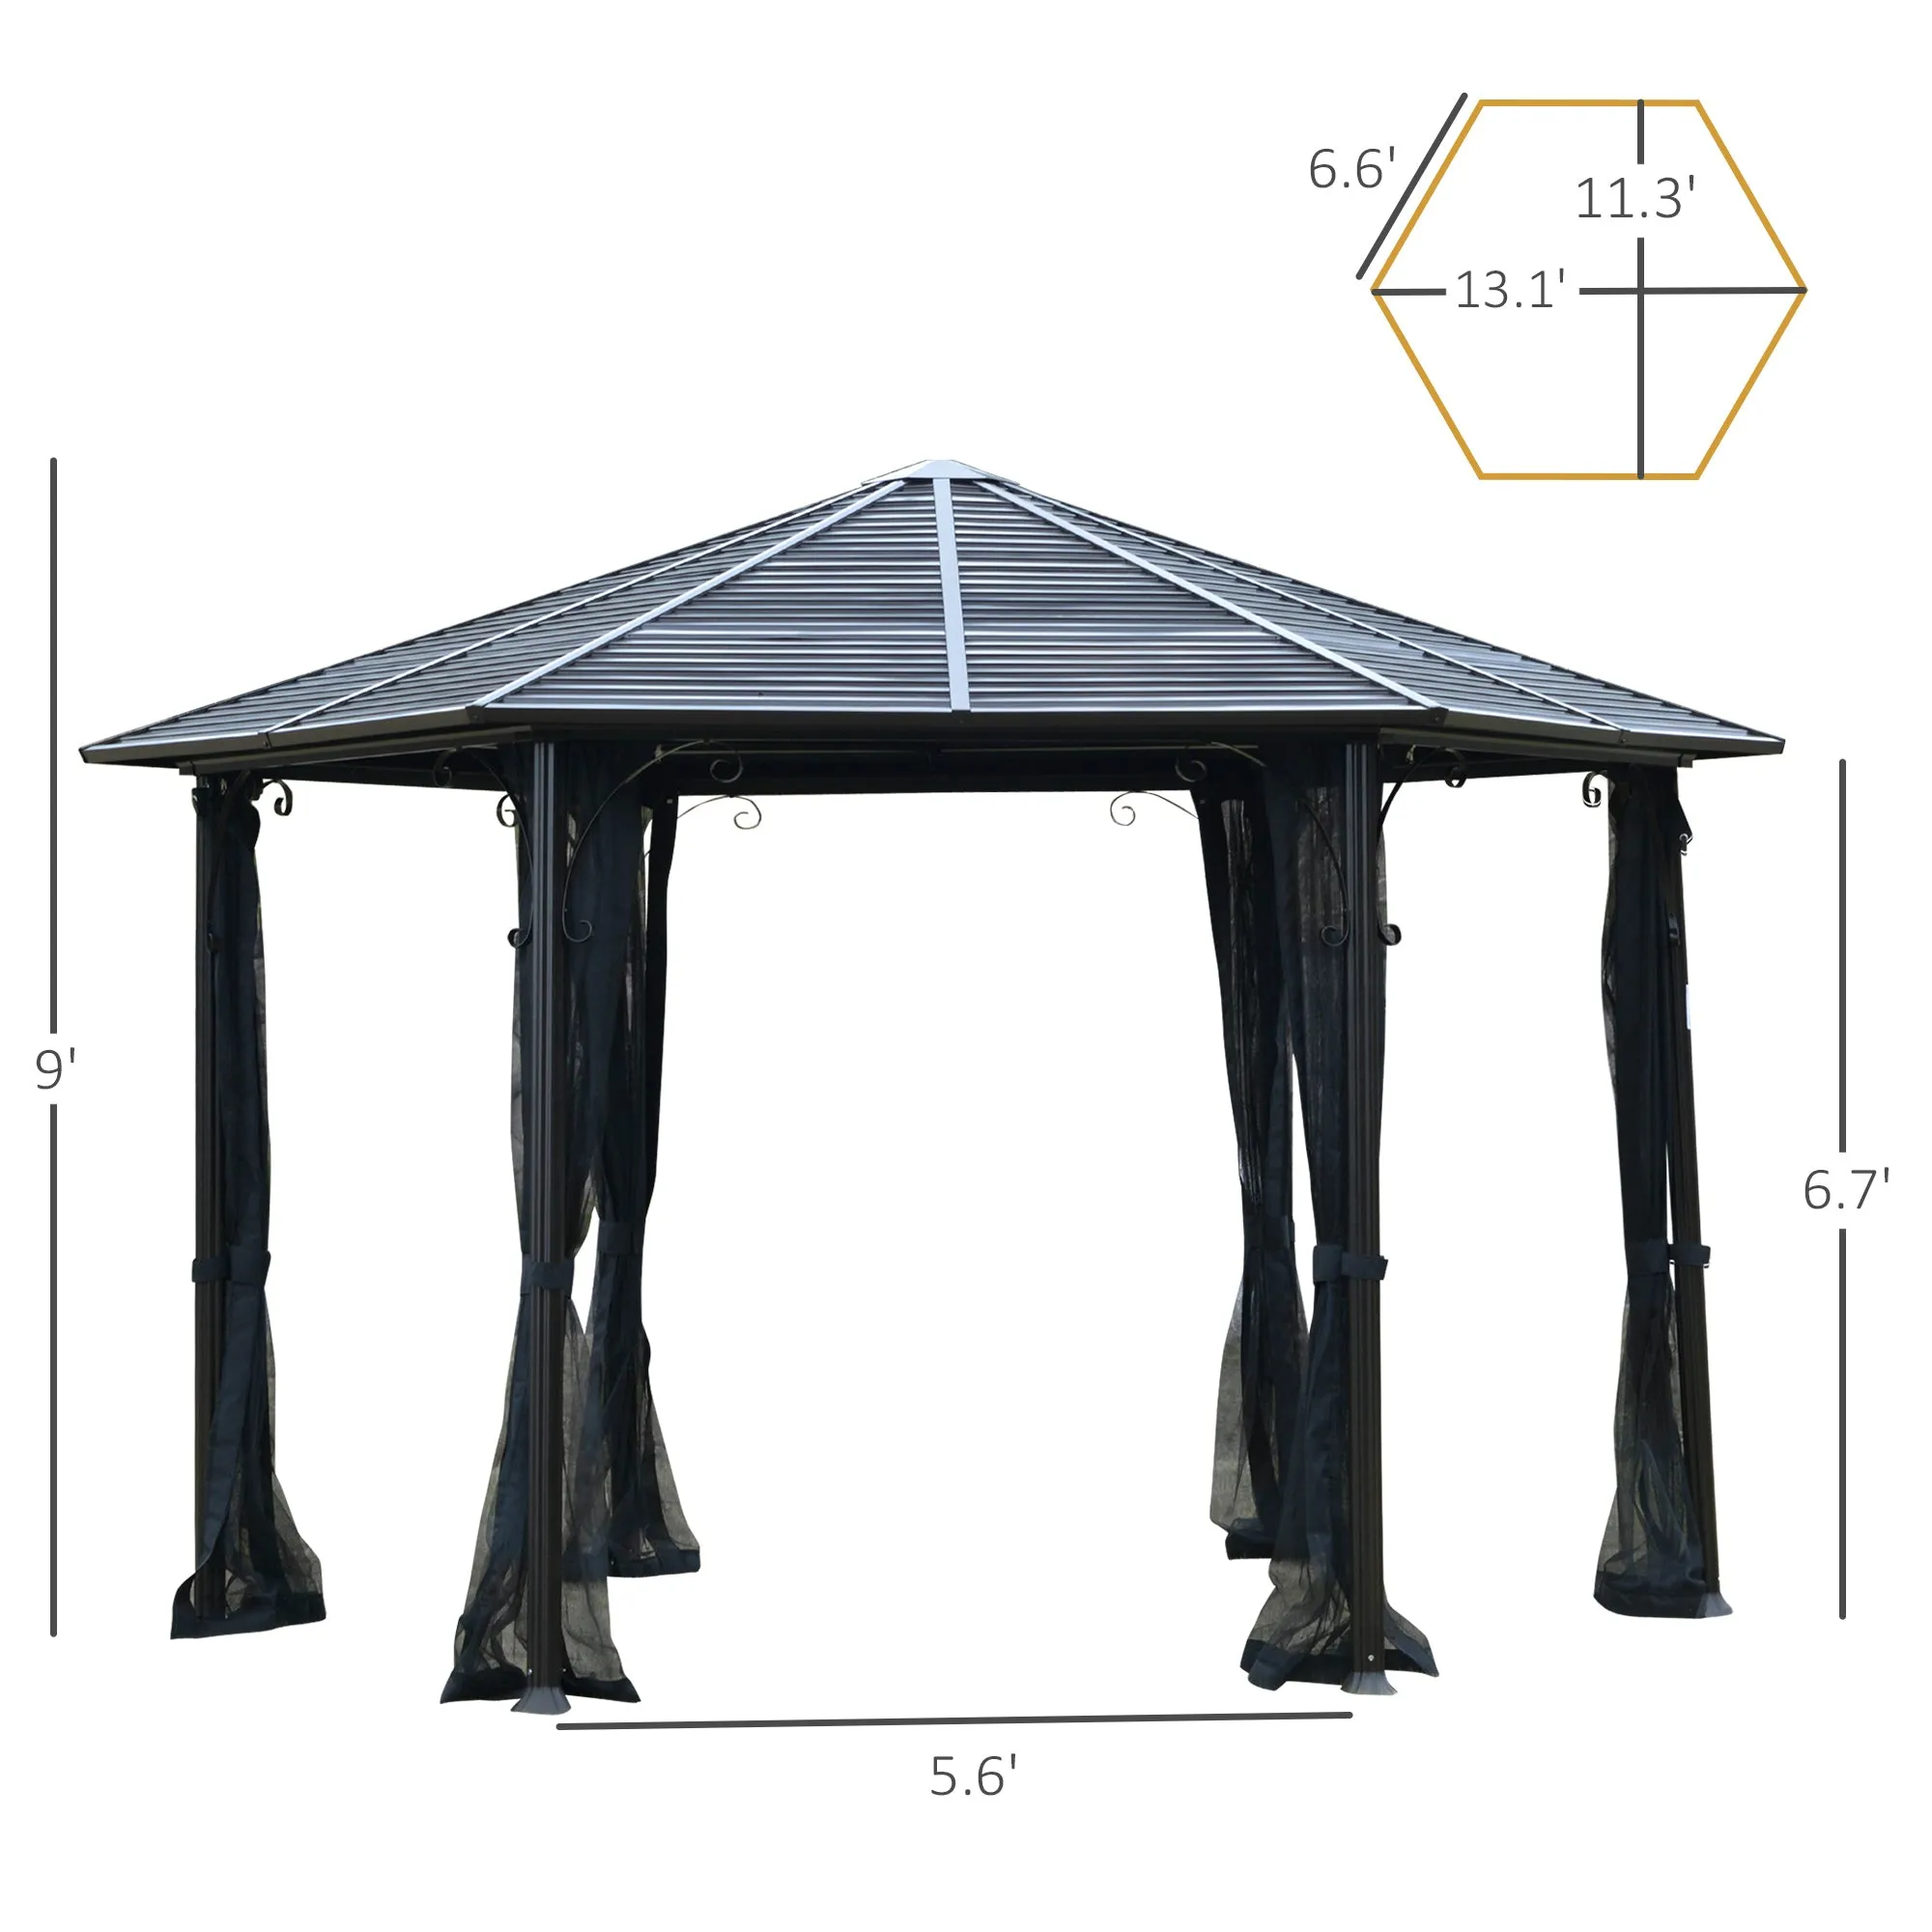 13' x 13' Steel Hexagonal Gazebo Canopy Heavy Duty Outdoor Pavilion with Aluminum Alloy Frame, Netting Sidewalls, Black